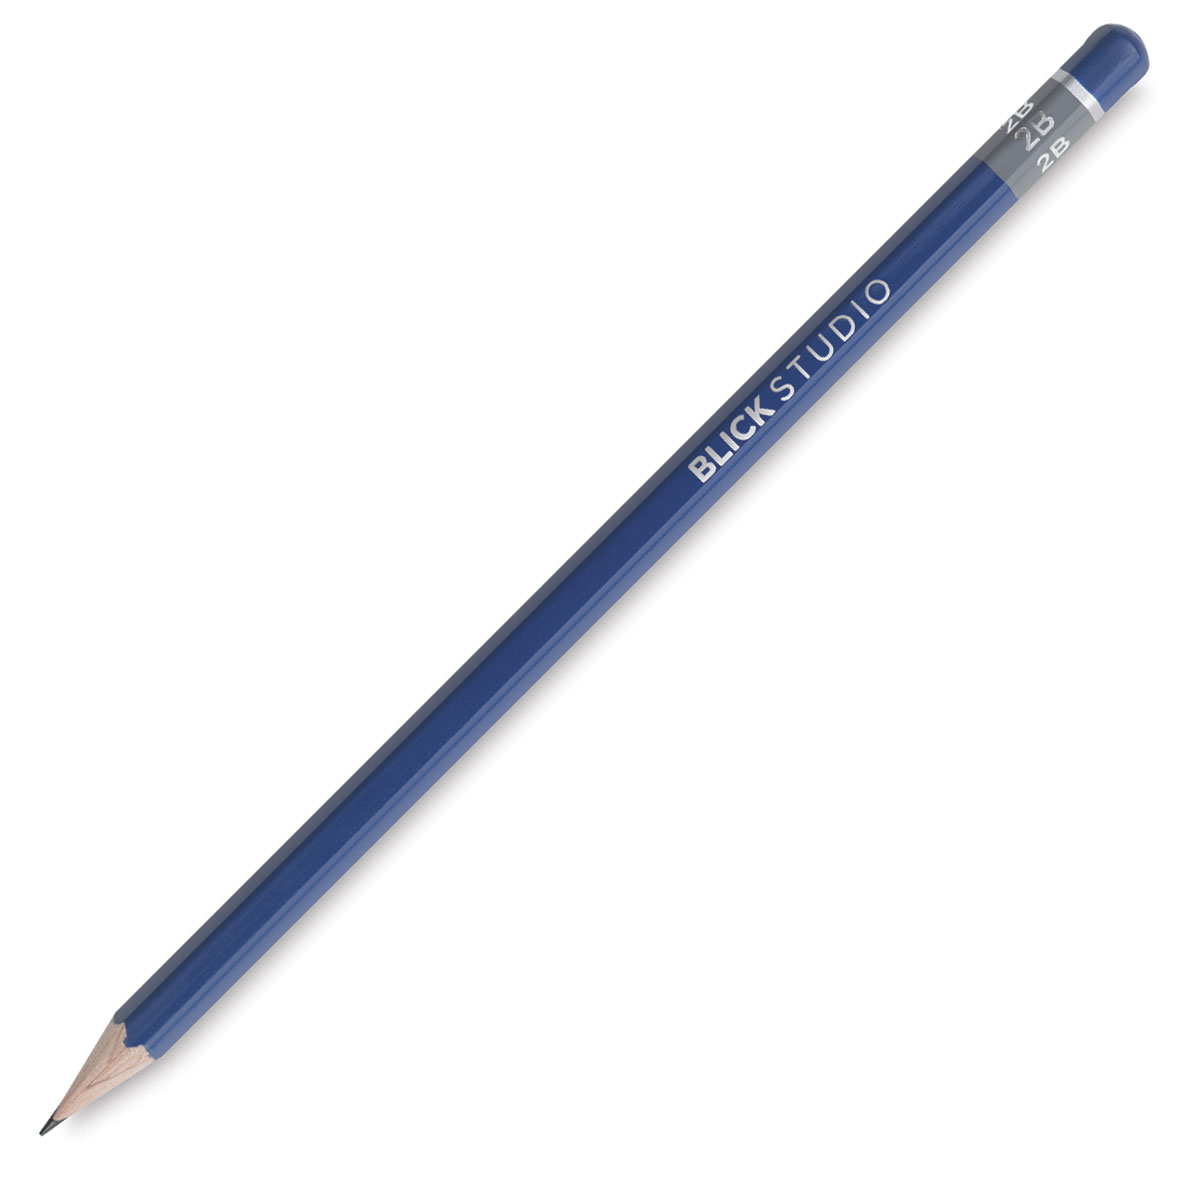 Blick Studio Drawing Pencils - 12 pack